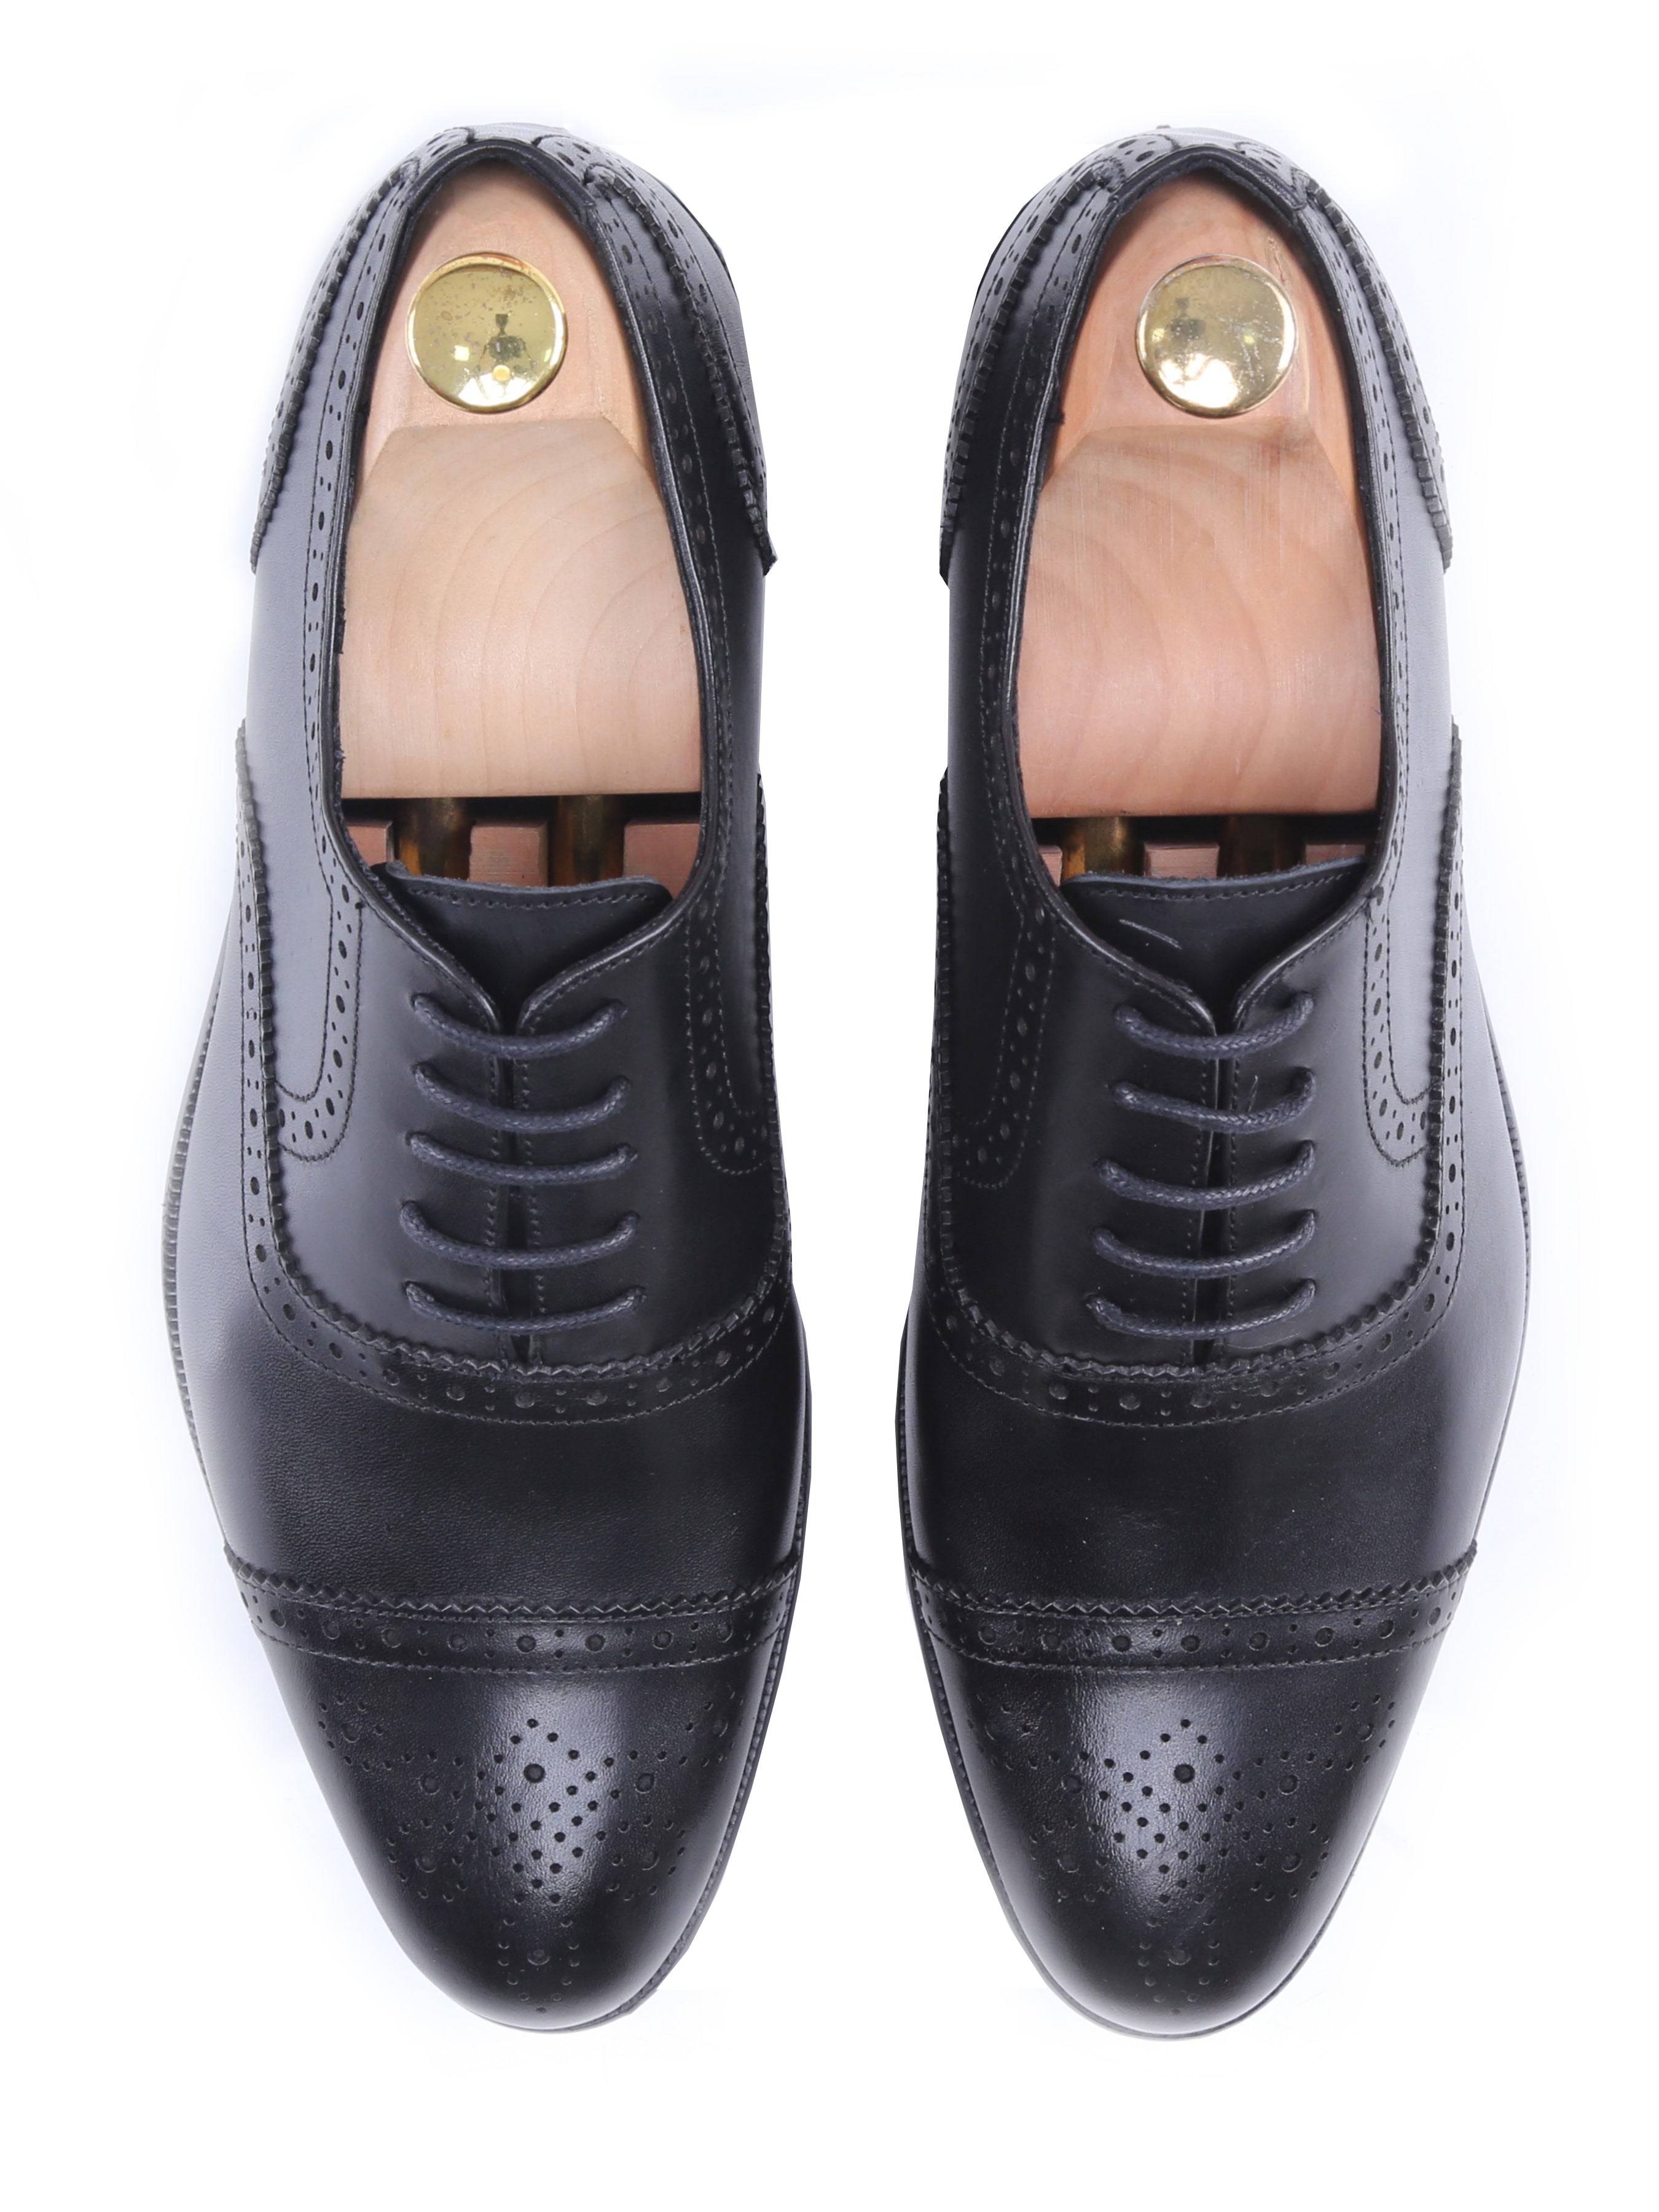 Oxford Cap Toe - Black Semi Brogue Lace Up - Zeve Shoes